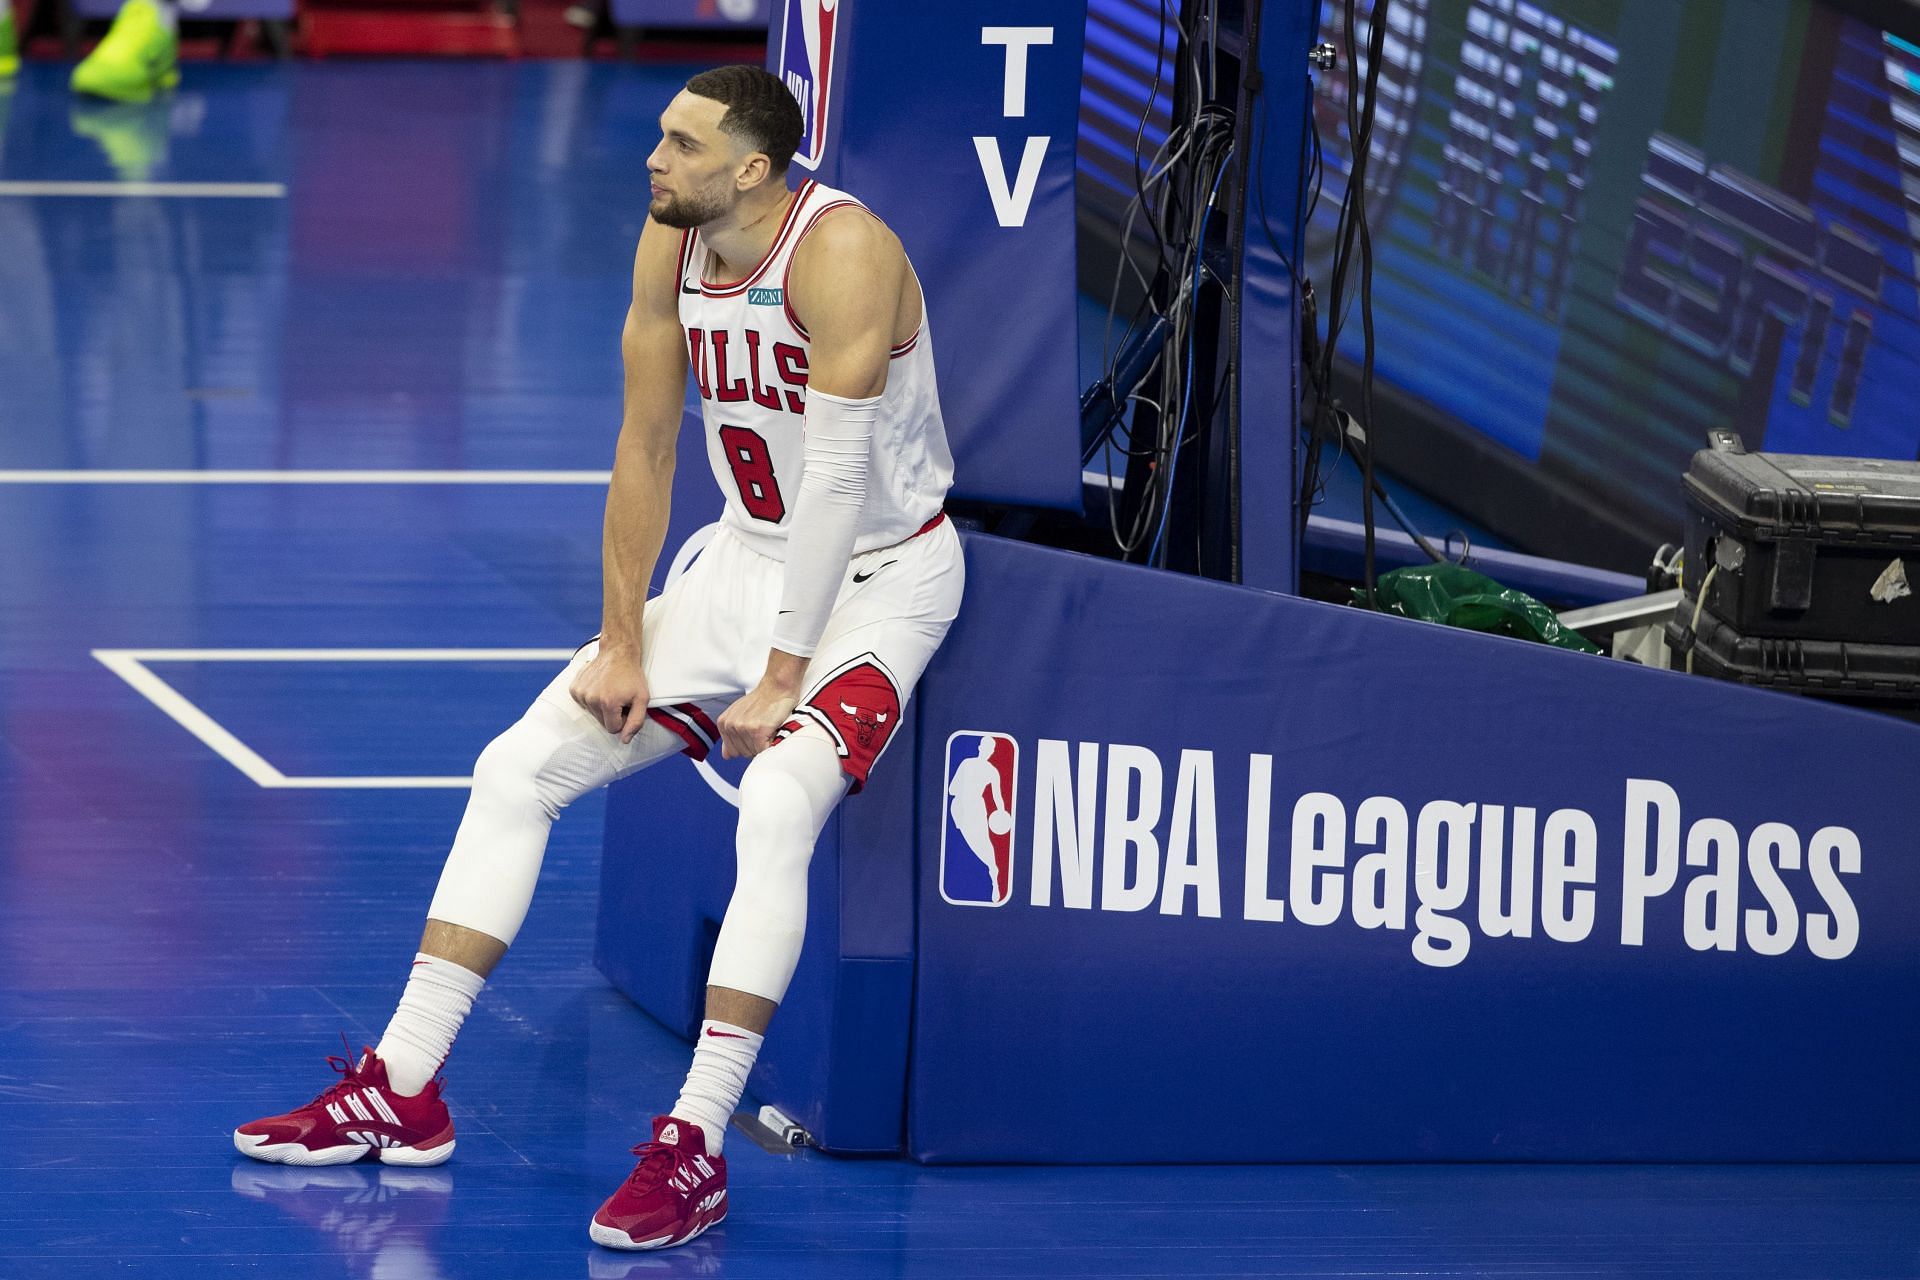 Zach LaVine and the Chicago Bulls are enjoying a sensational start to the new NBA season